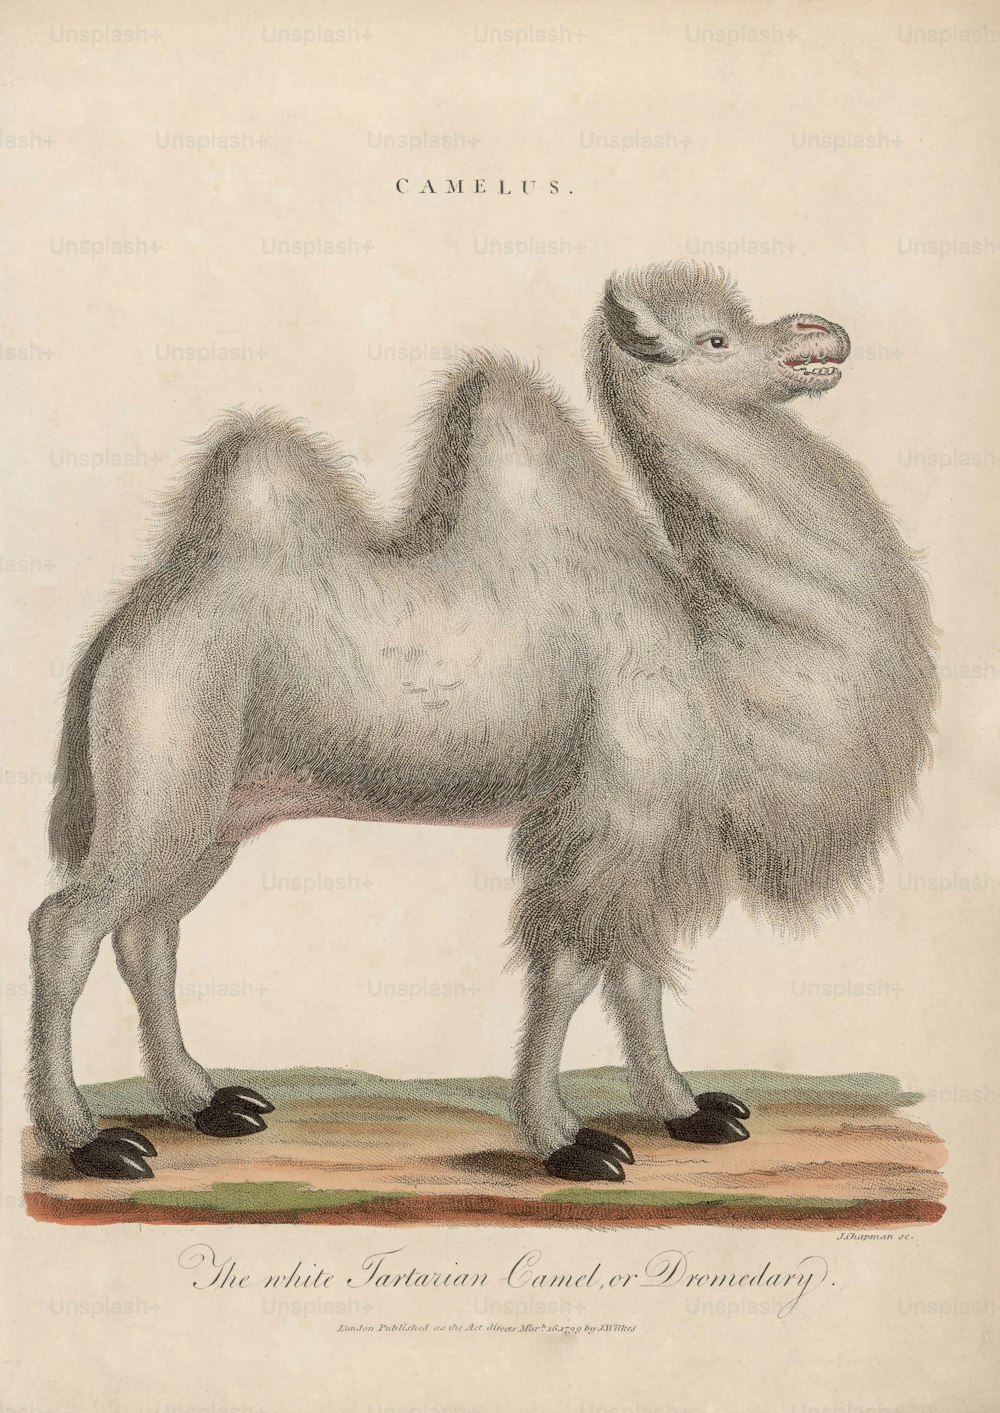 "O camelo branco da Tartaria ou dromedário", por volta de 1799. Gravura de J. Chapman. (Foto: Hulton Archive/Getty Images)